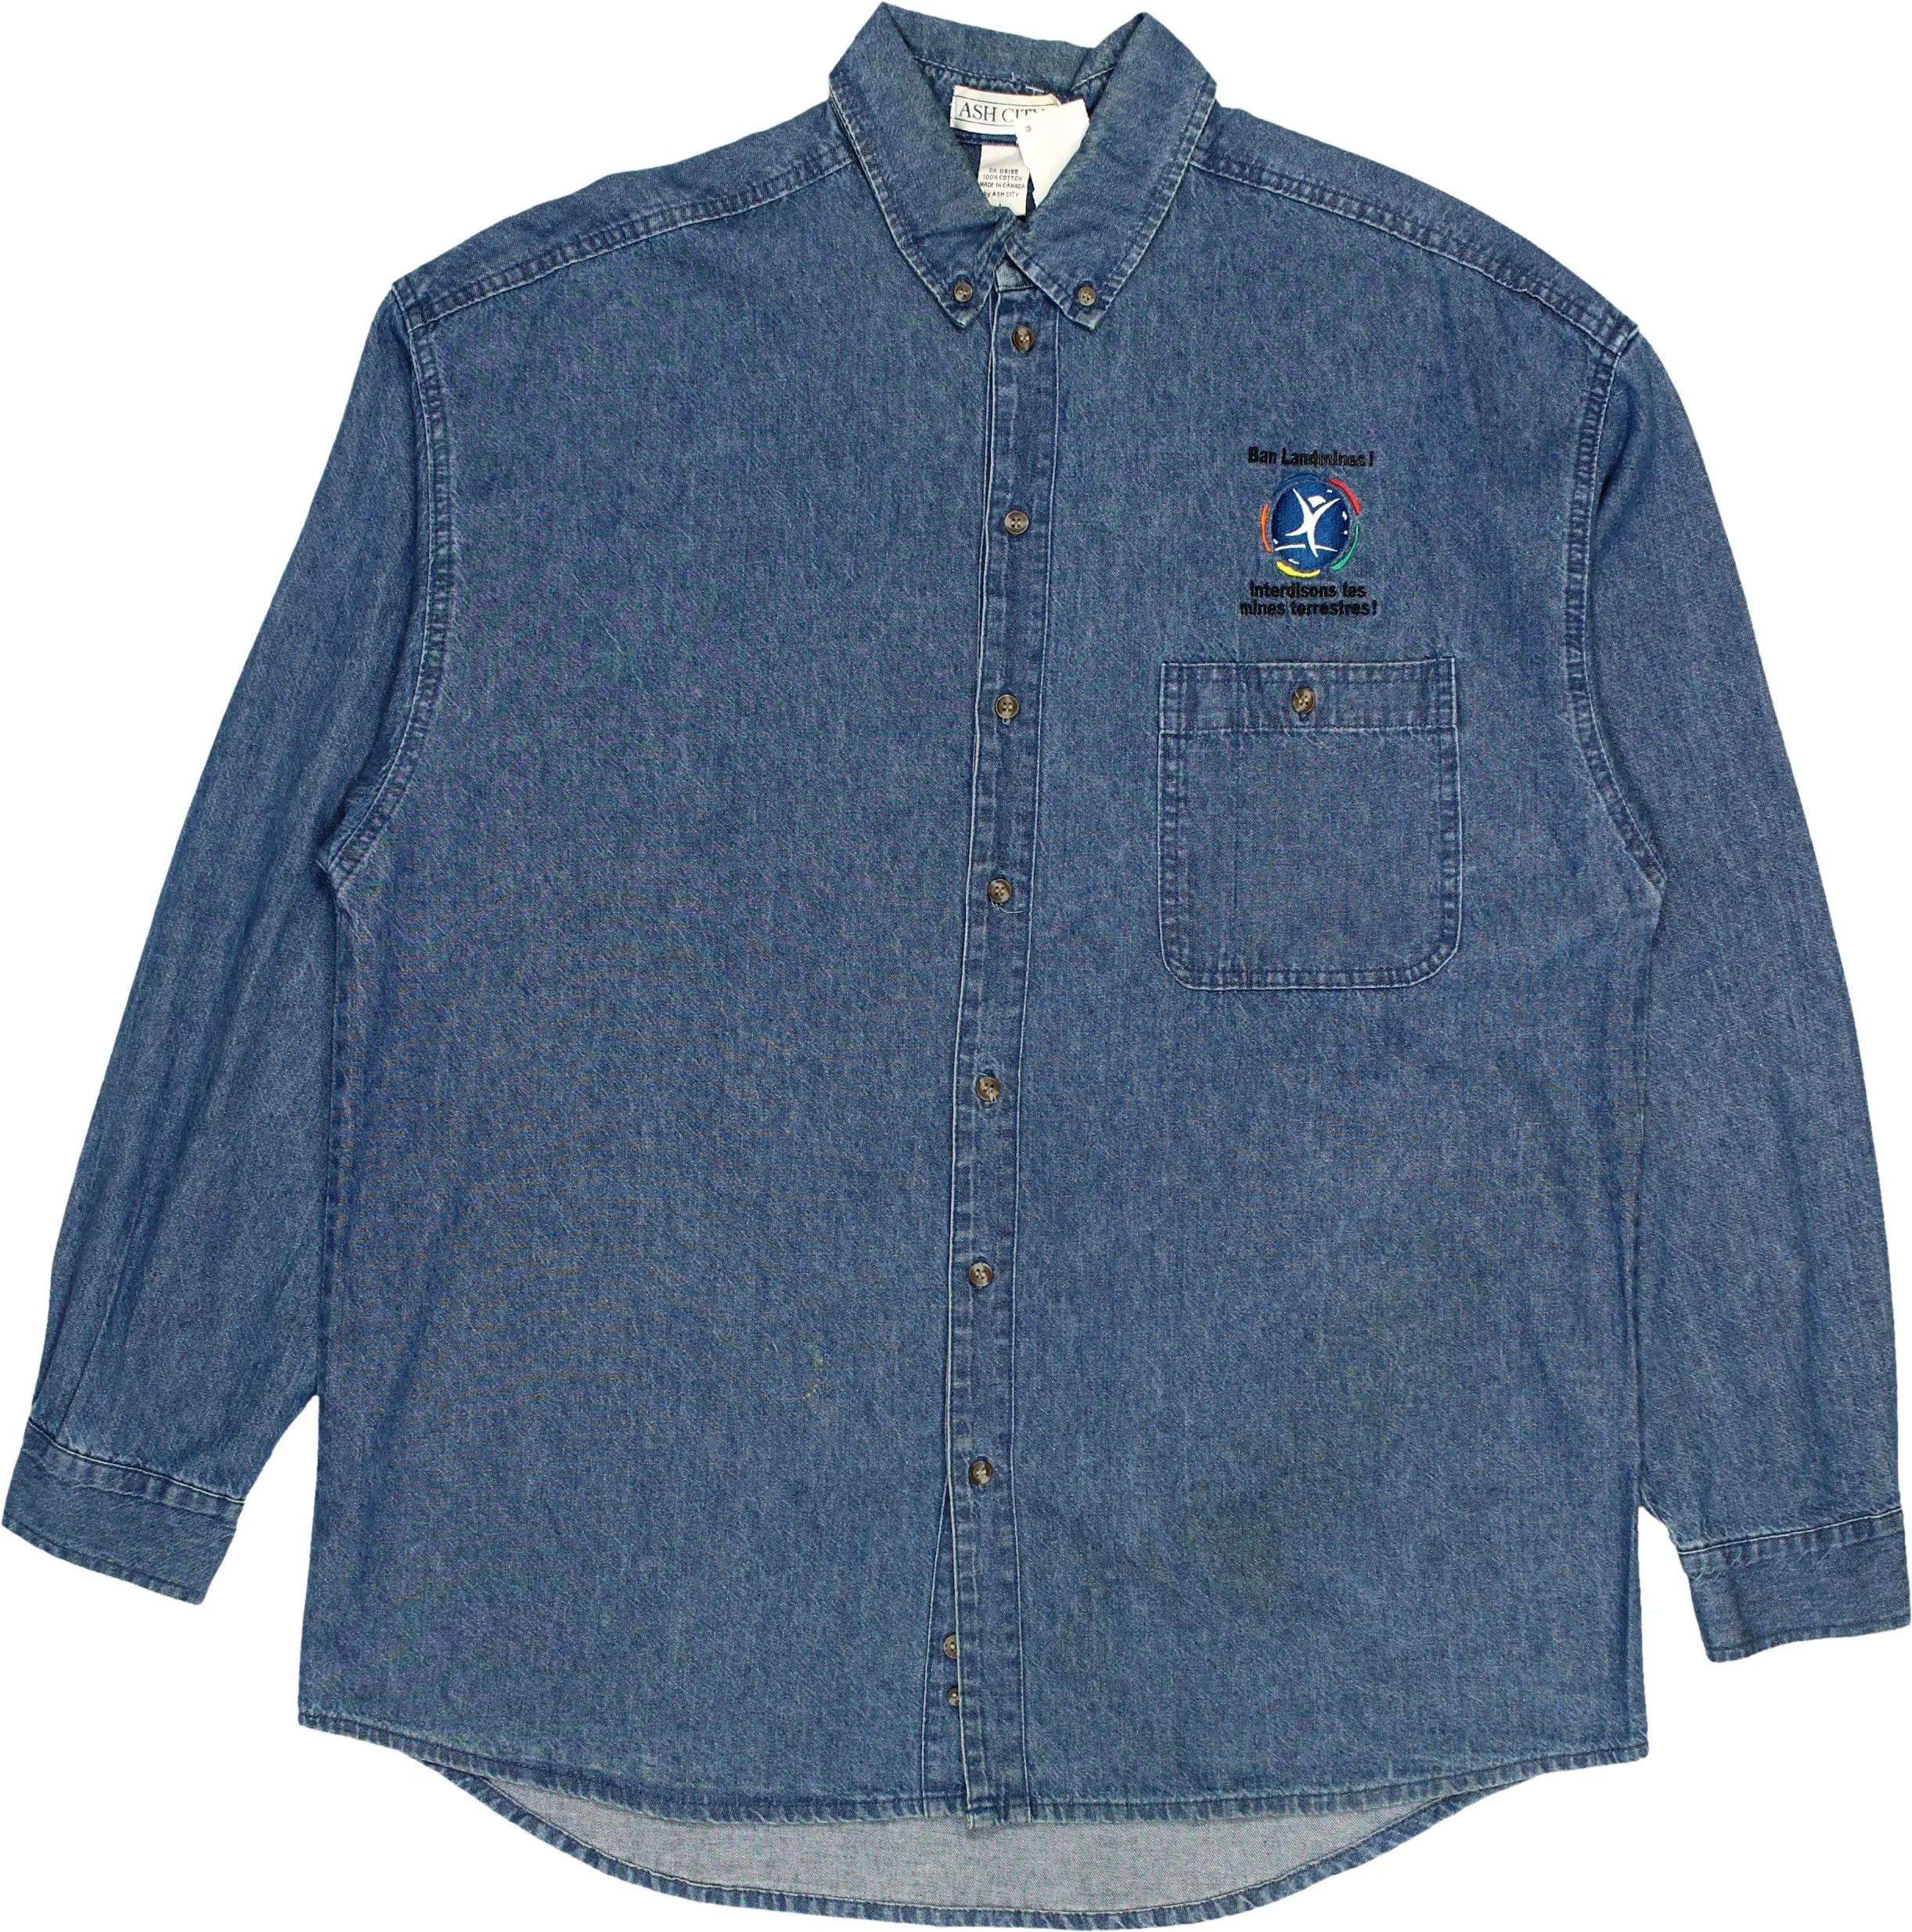 Ash City - Denim Shirt- ThriftTale.com - Vintage and second handclothing